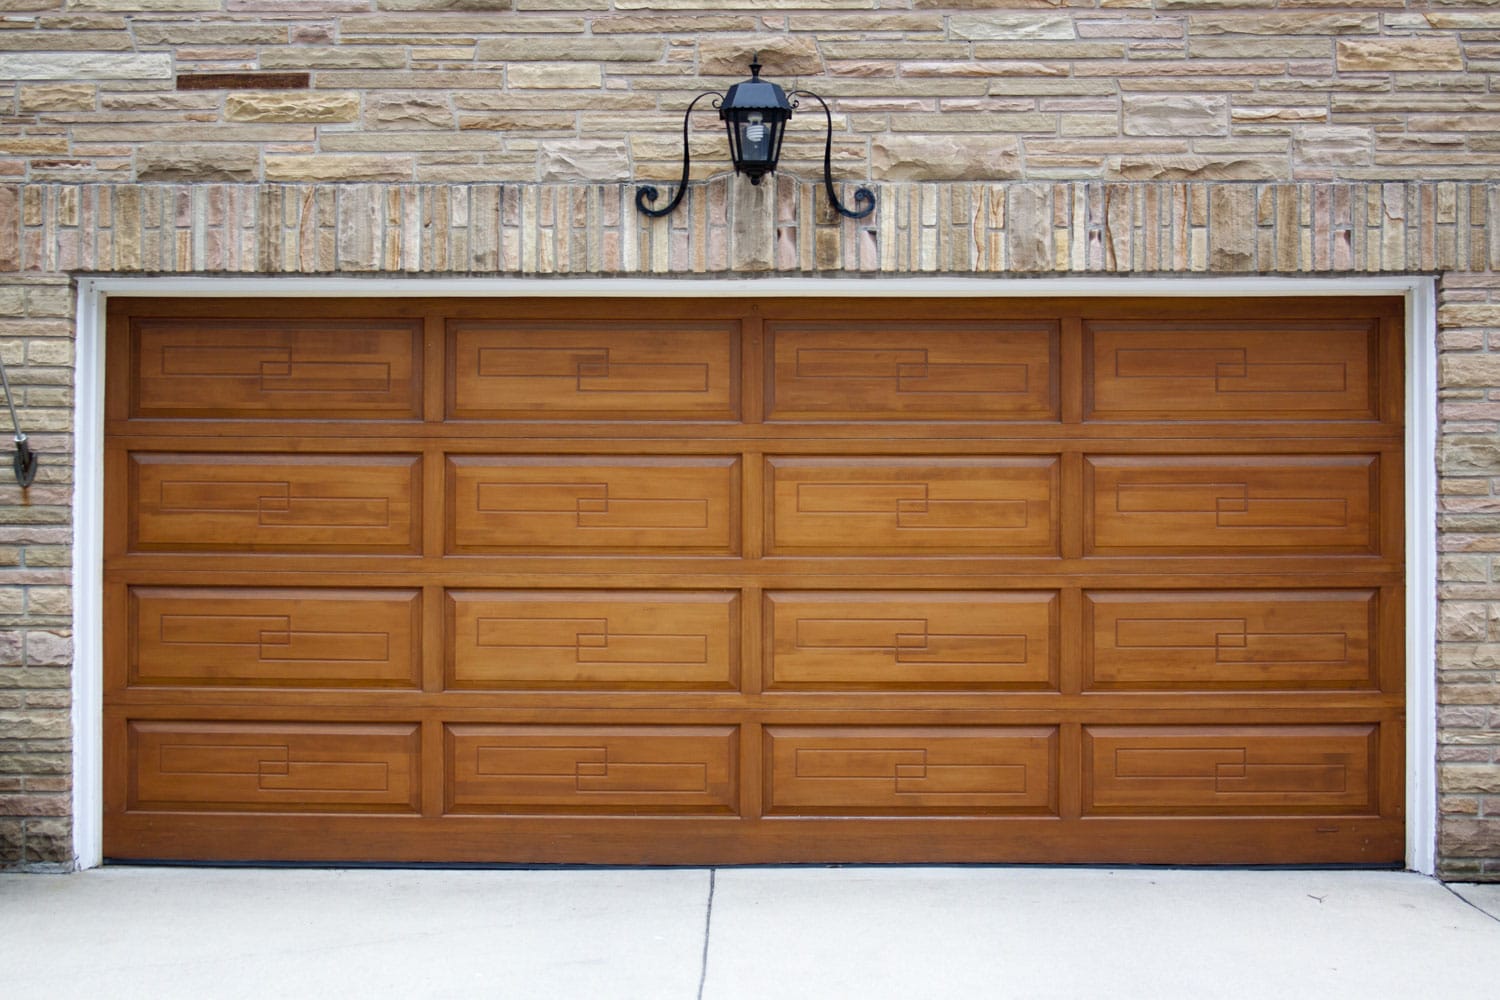 A huge wooden garage door with white trims